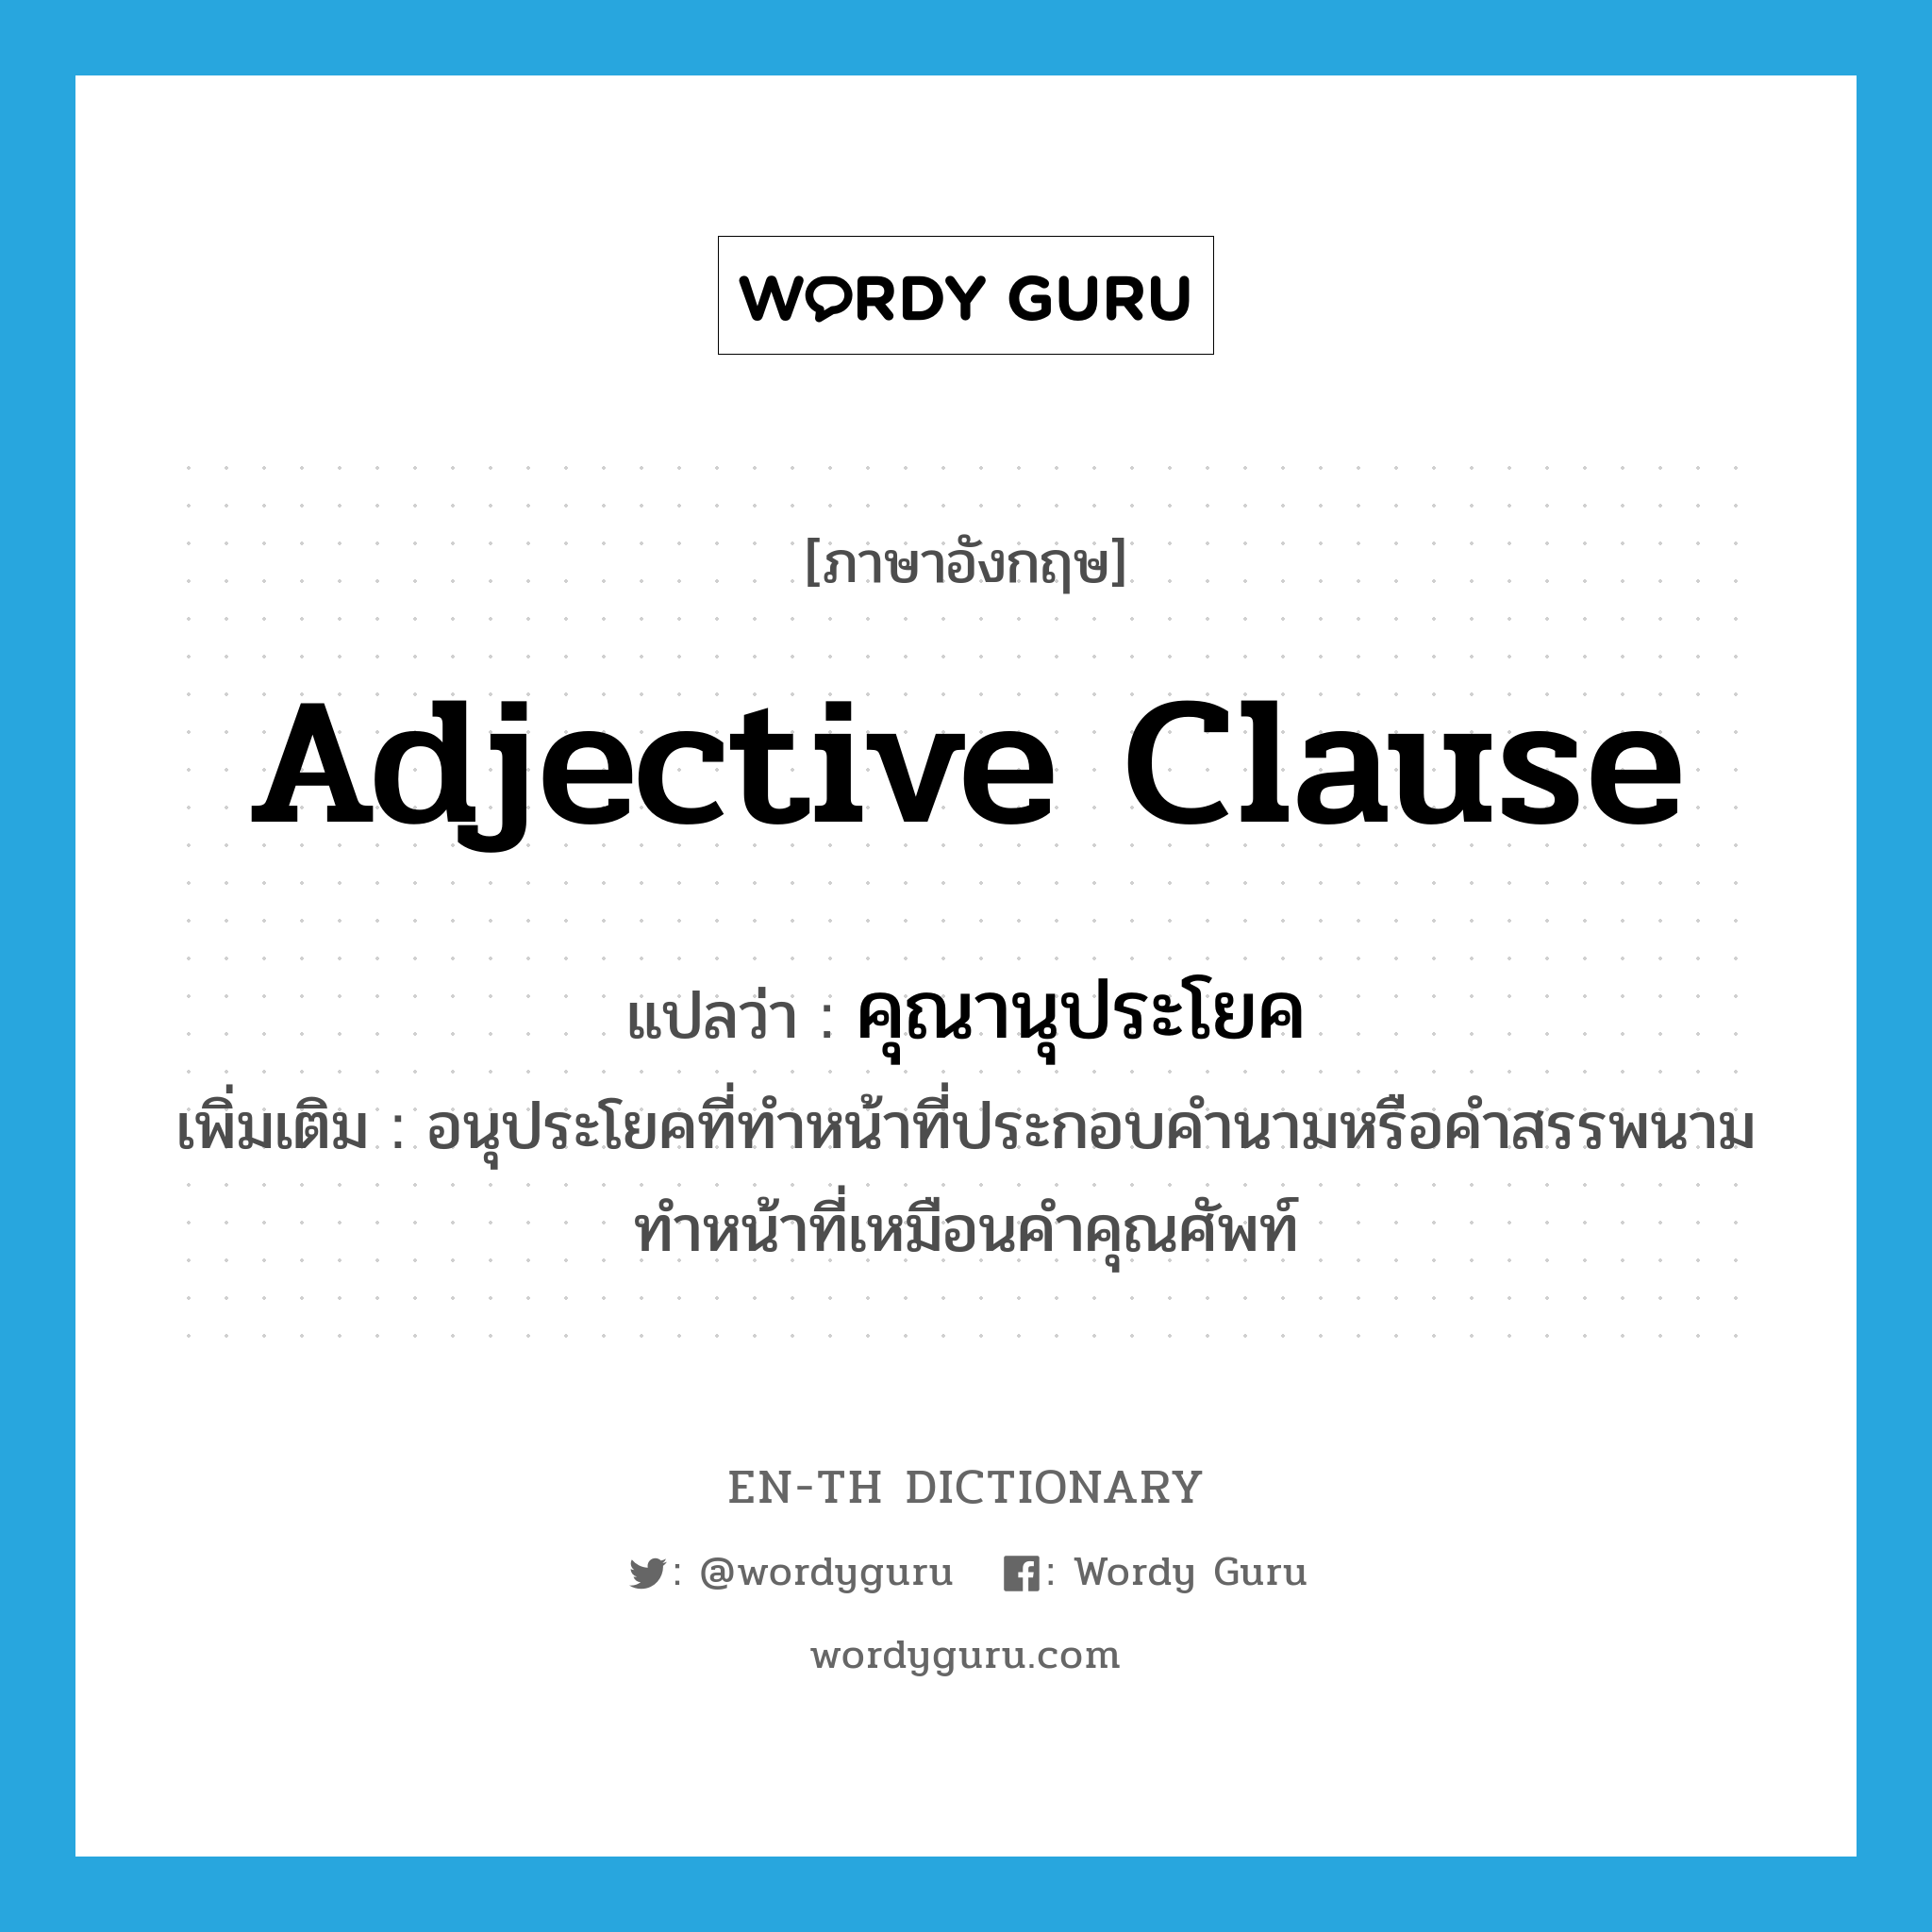 adjective clause แปลว่า?, คำศัพท์ภาษาอังกฤษ adjective clause แปลว่า คุณานุประโยค ประเภท N เพิ่มเติม อนุประโยคที่ทำหน้าที่ประกอบคำนามหรือคำสรรพนาม ทำหน้าที่เหมือนคำคุณศัพท์ หมวด N